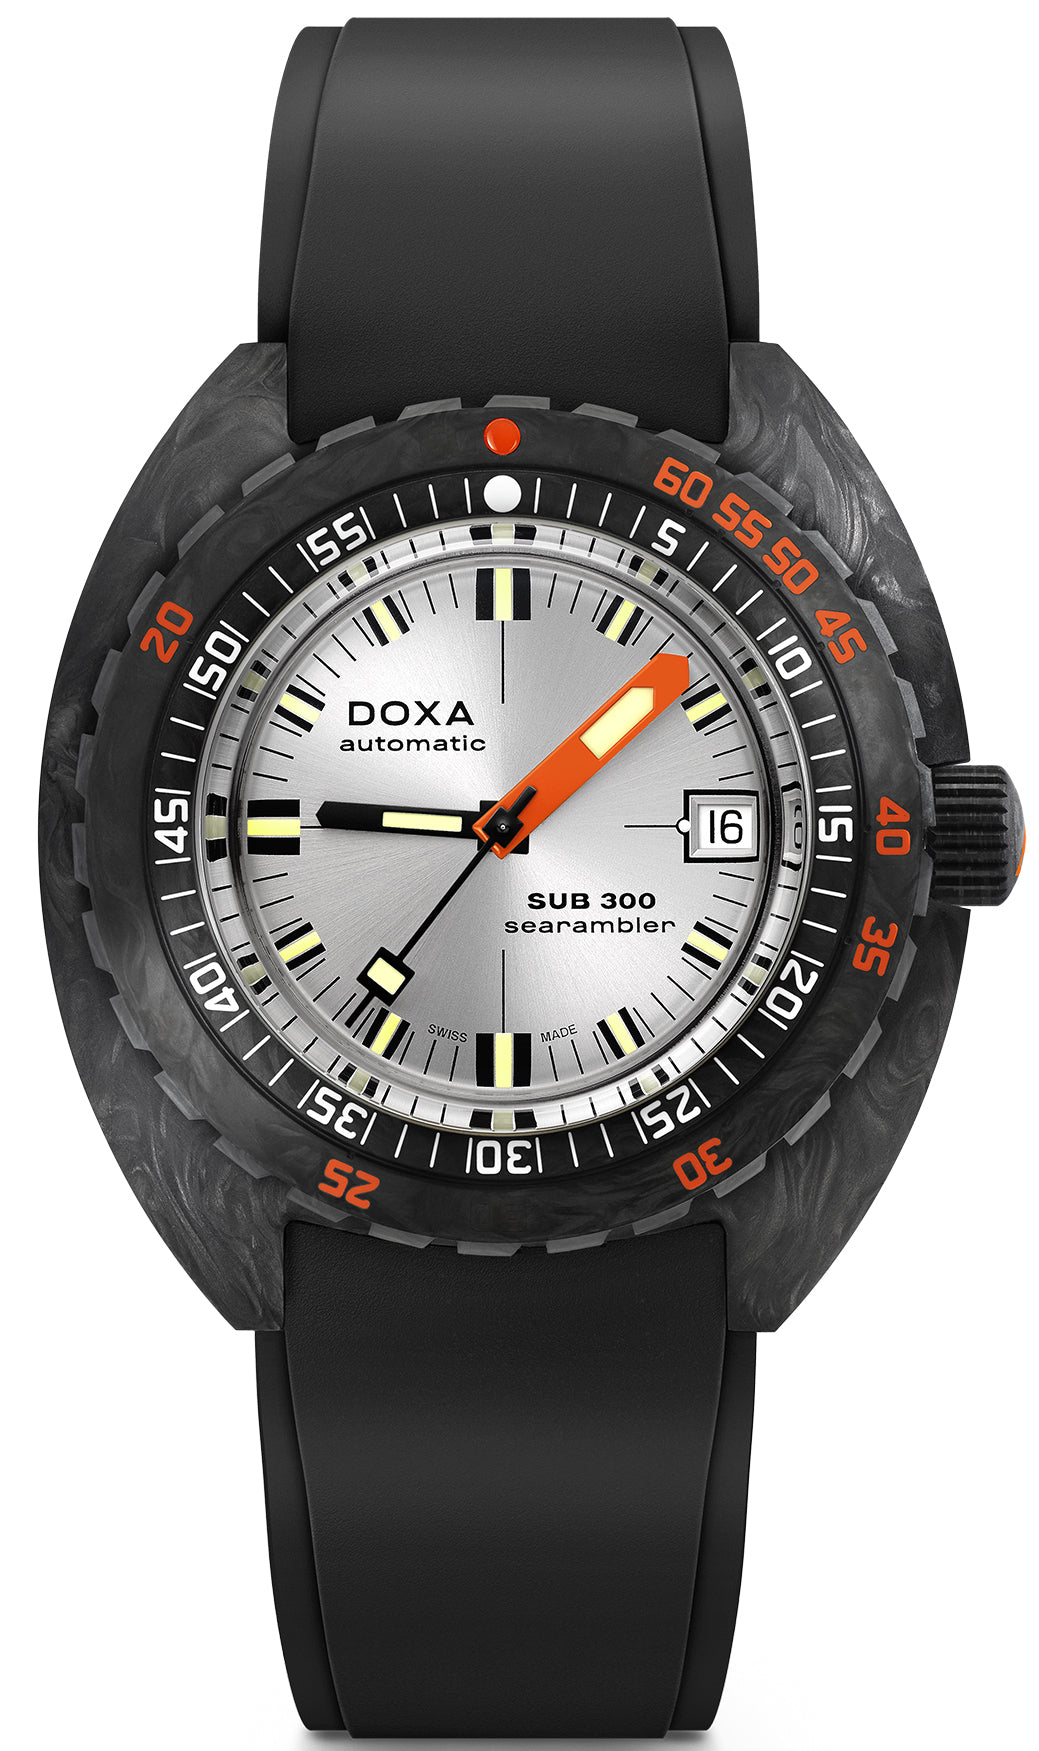 Photos - Wrist Watch DOXA Watch SUB 300 Carbon COSC Searambler Rubber DOX-022 